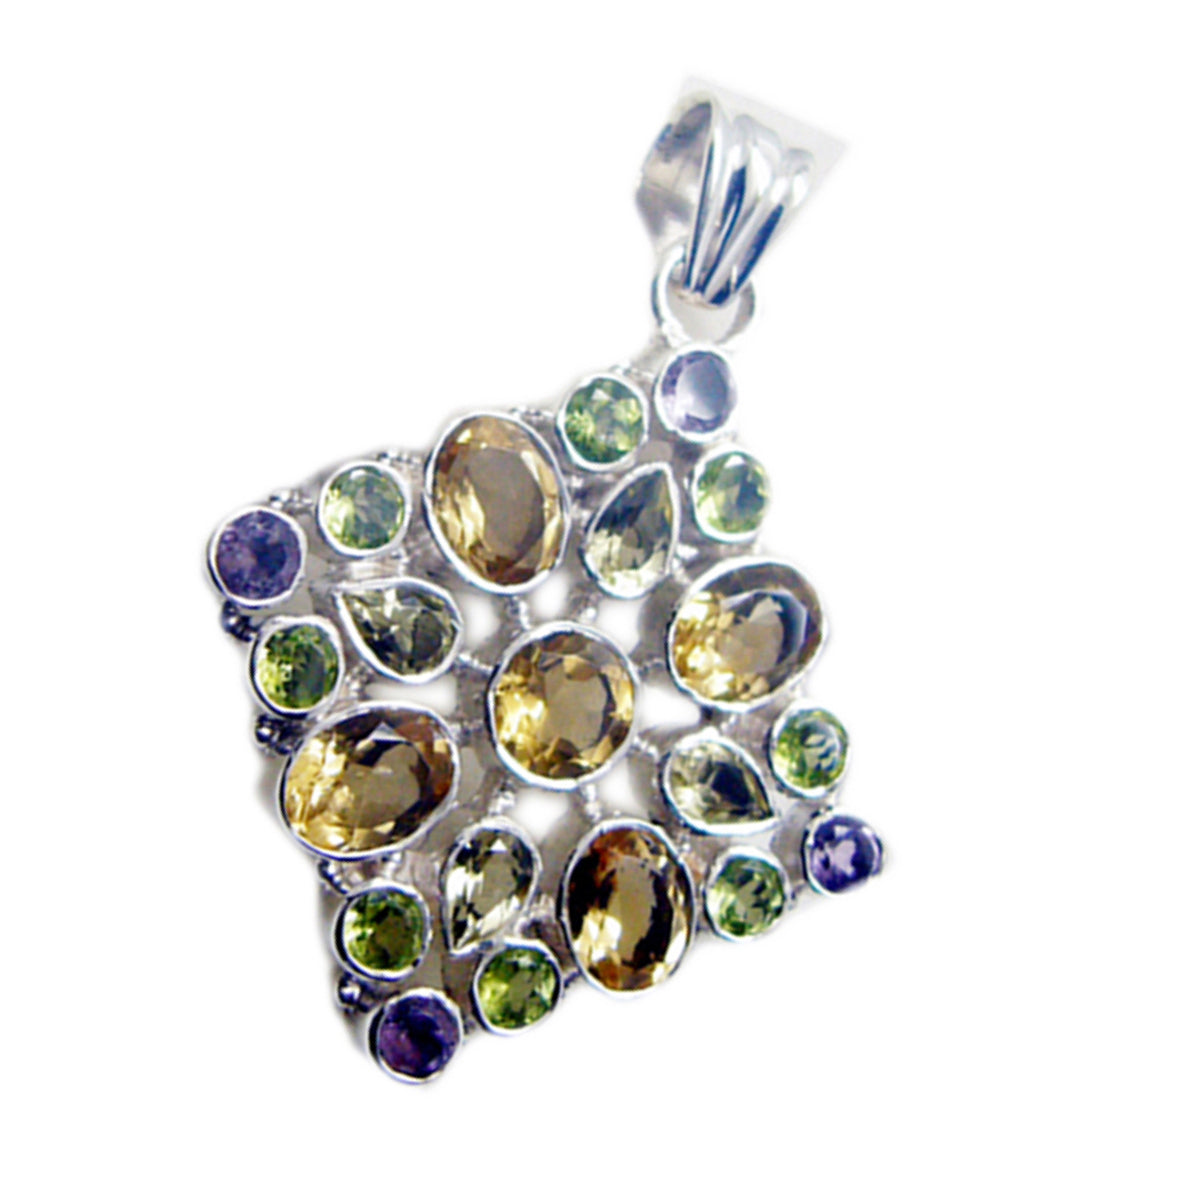 Riyo Spunky Gemstone Multi Faceted Multi Color Multi Stone Sterling Silver Pendant Gift For Christmas